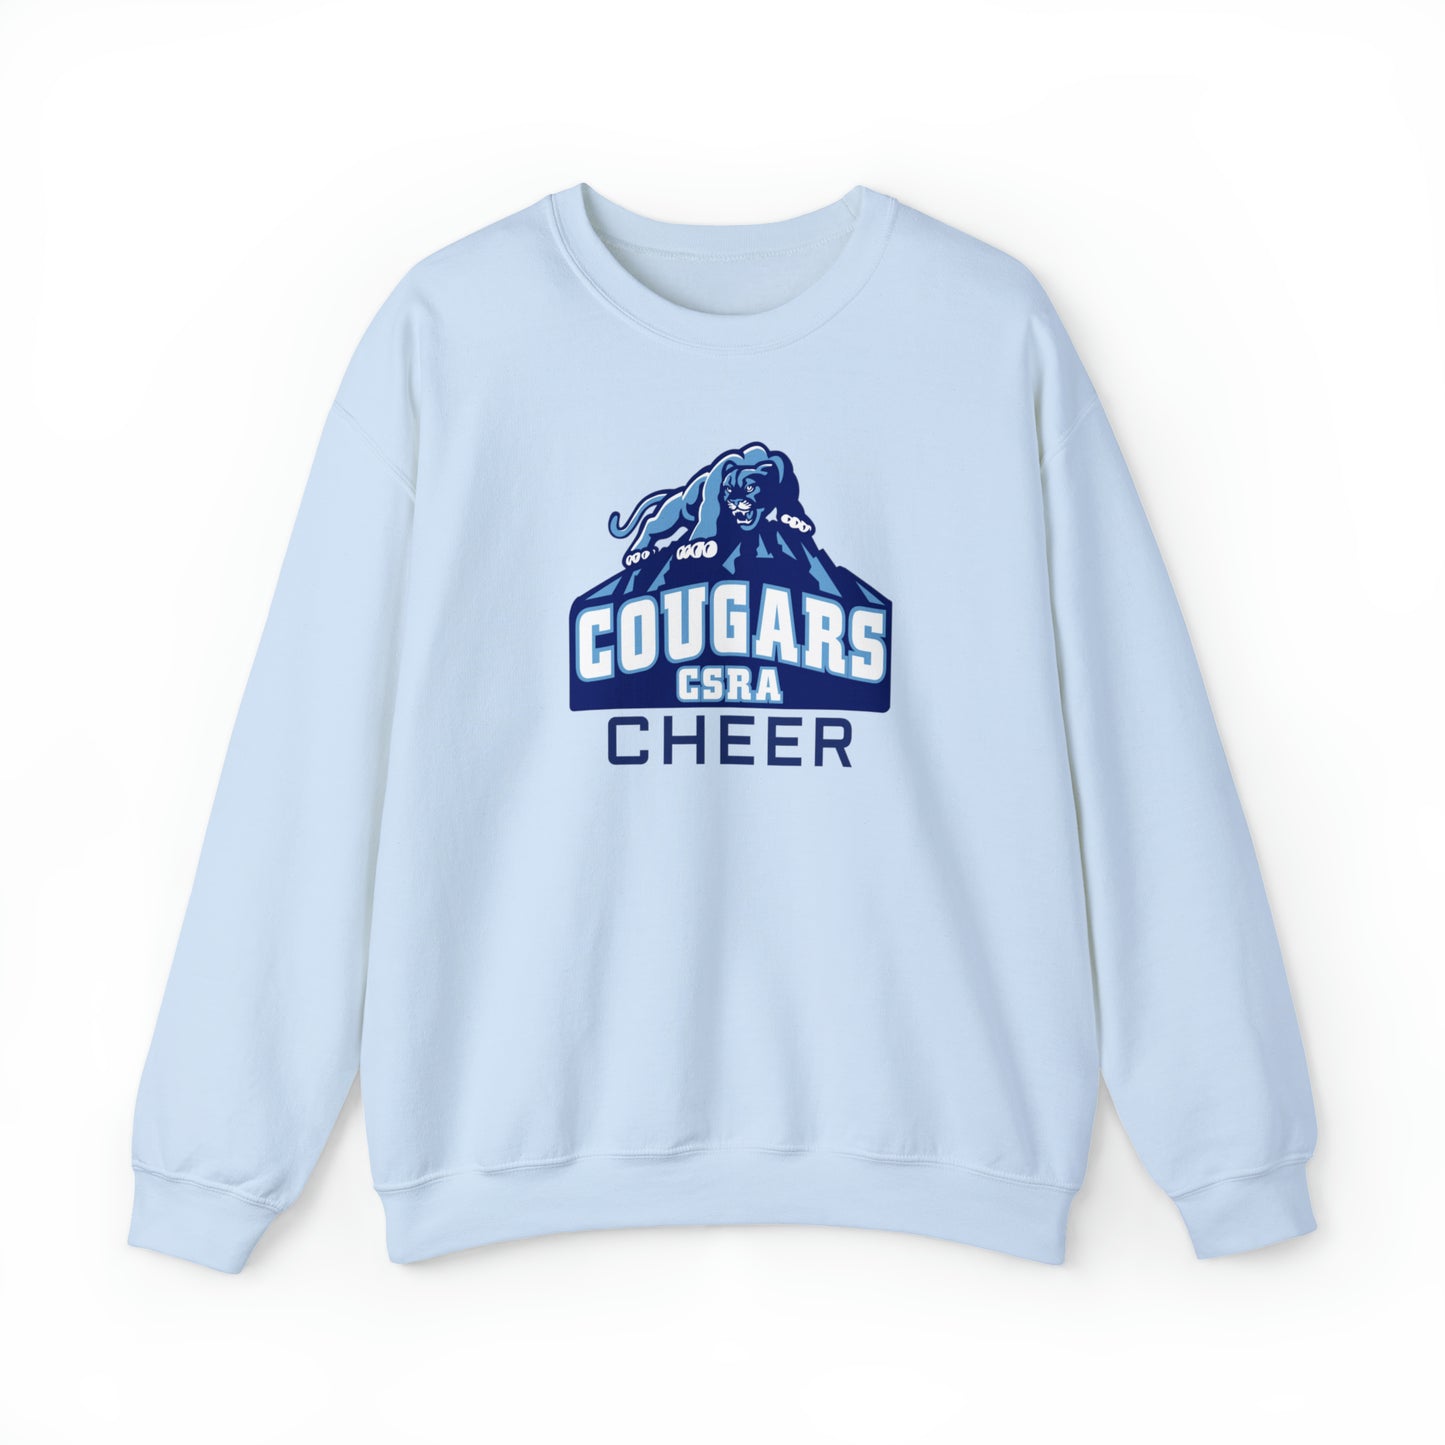 Cougars Cheer Unisex Crewneck Sweatshirt